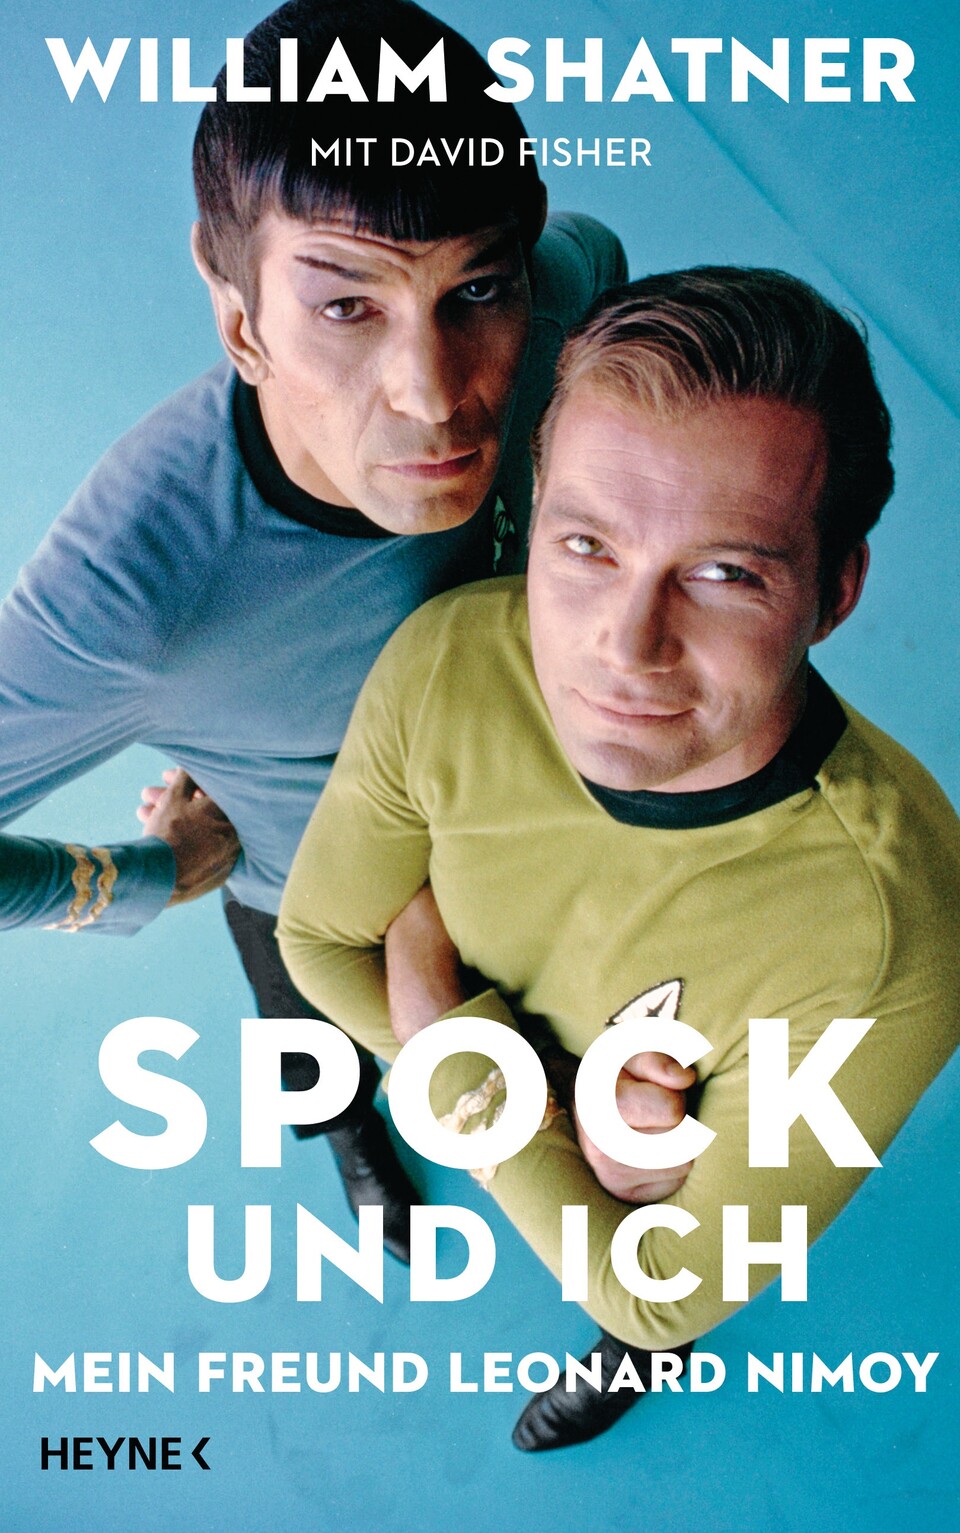 William Shatners Buch über den verstorbenen Spock-Darsteller Leonard Nimoy.